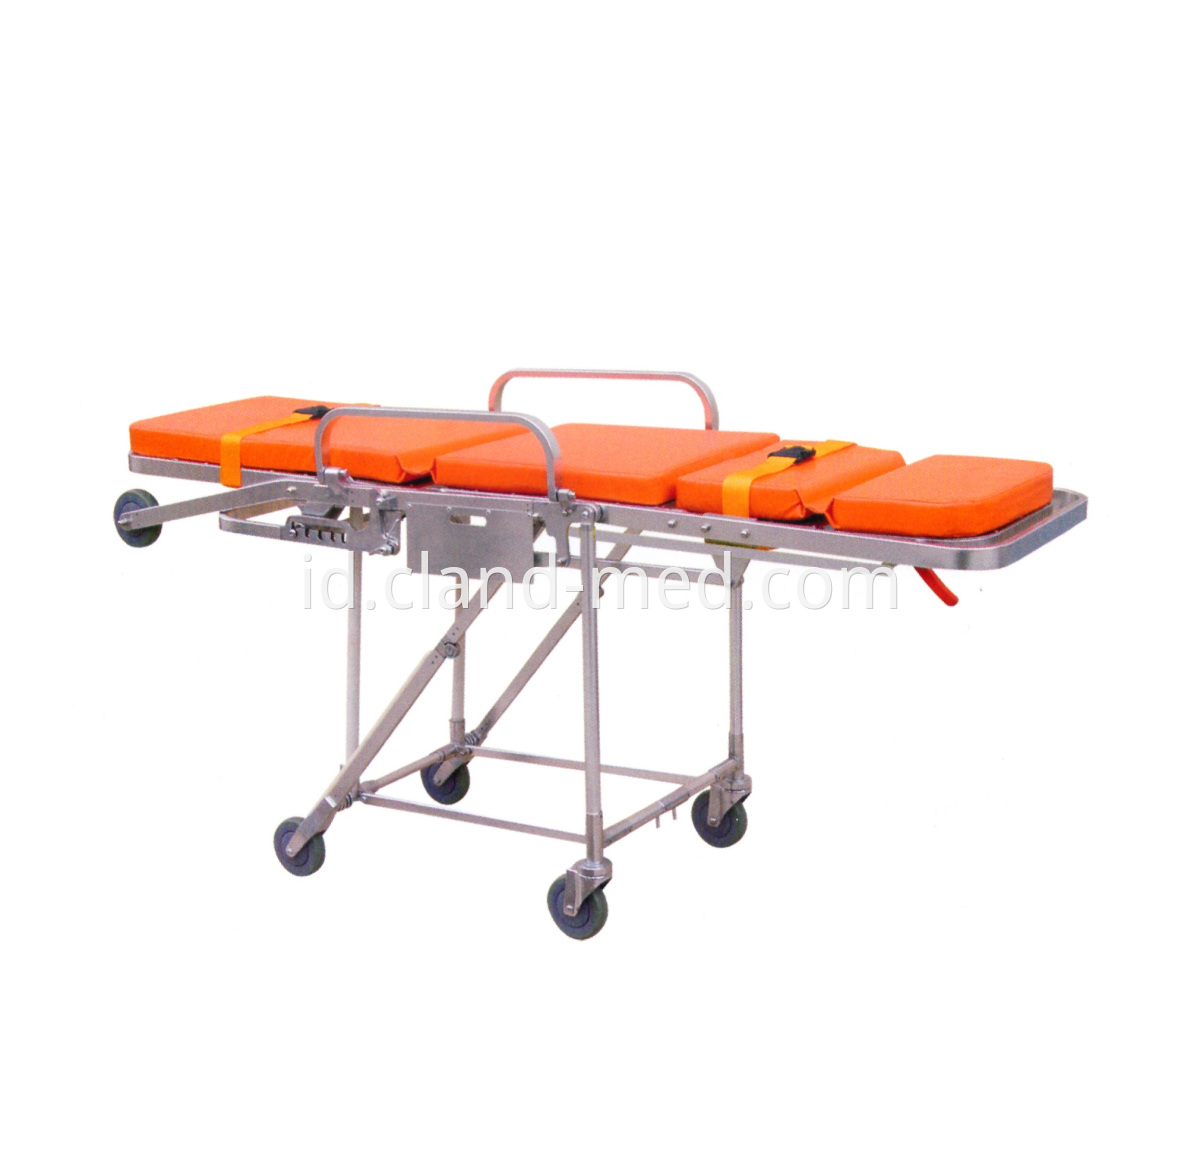 CL-HT0004 Chair form ambulance stretcher 2